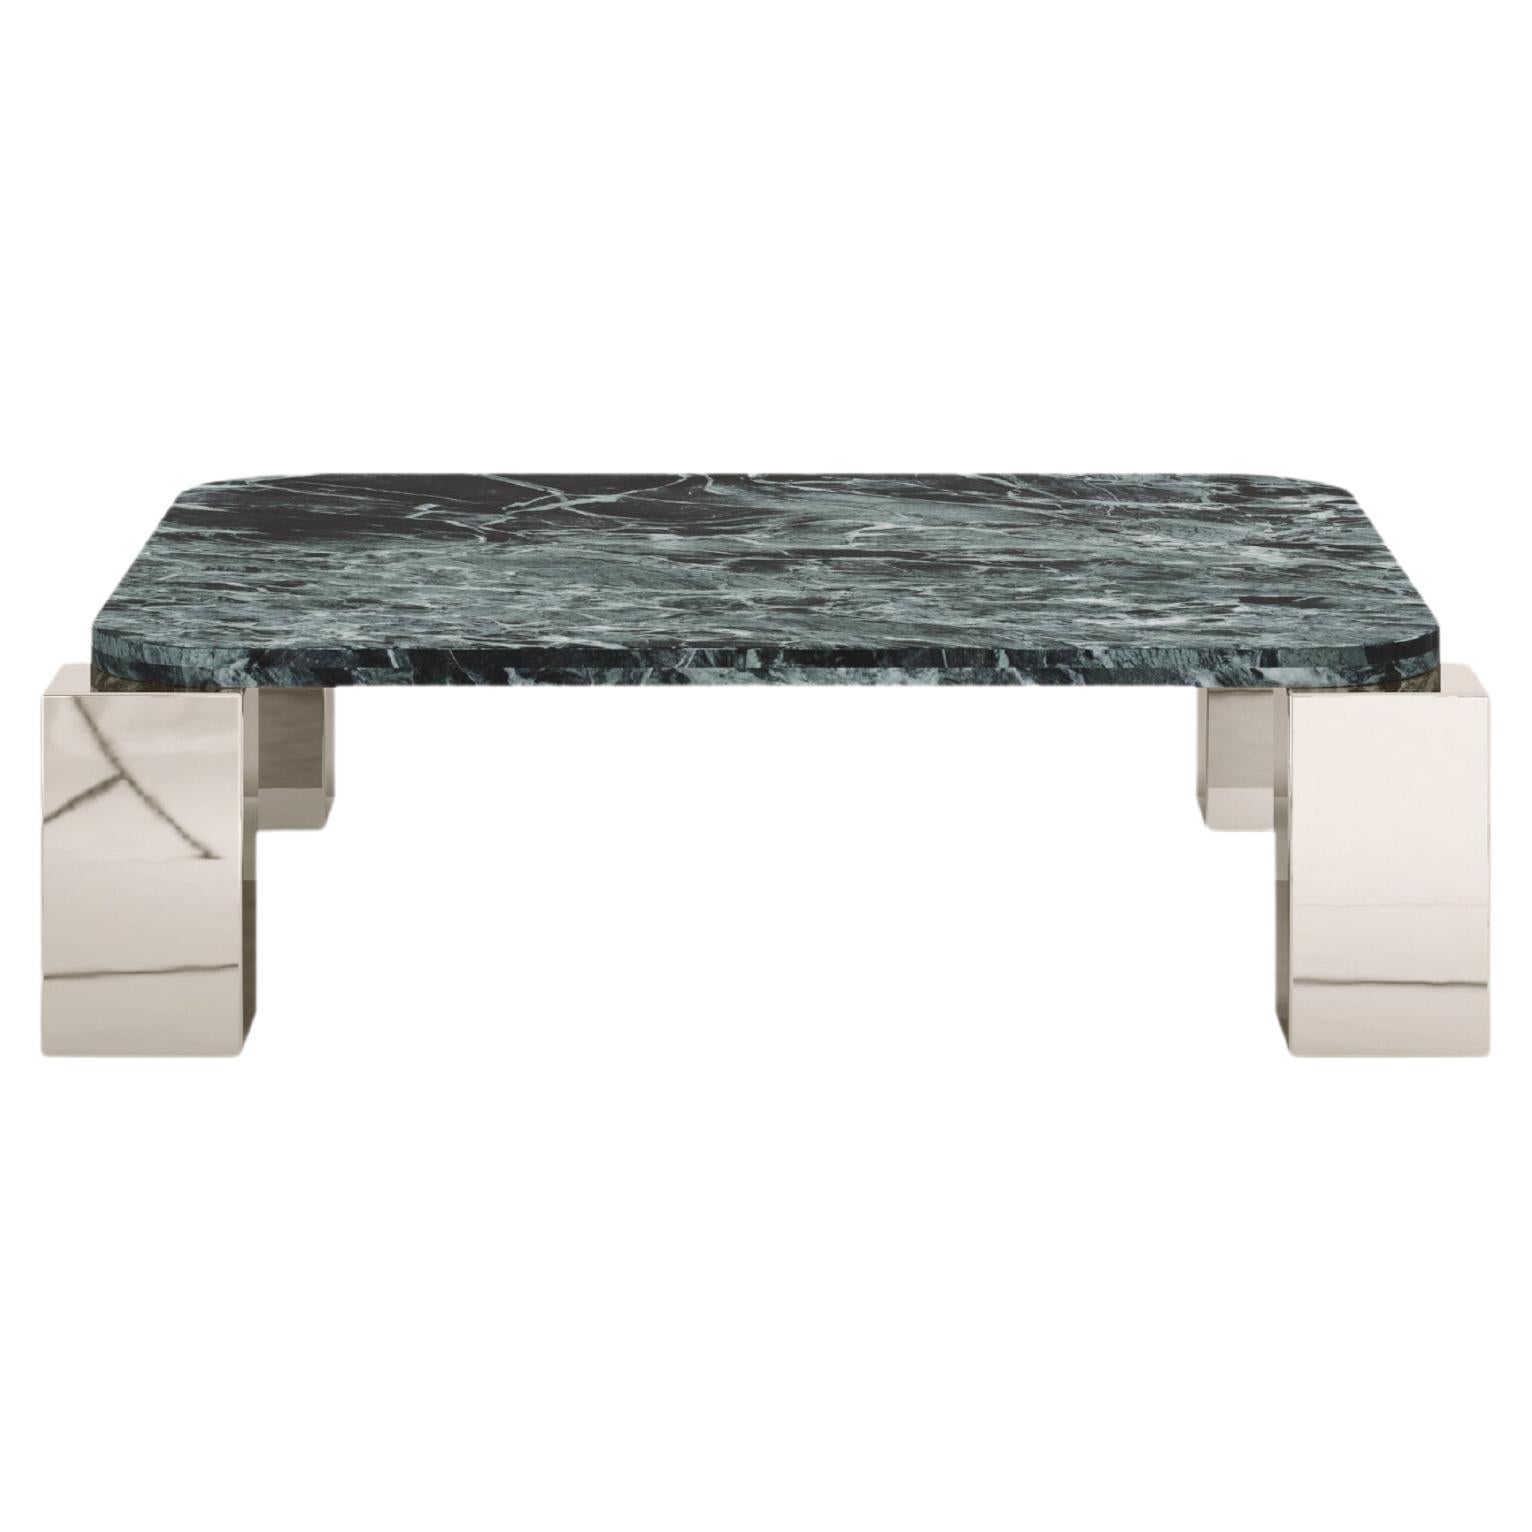 FORM(LA) Cubo Square Coffee Table 44”L x 44"W x 14”H Verde Alpi Marble & Chrome For Sale